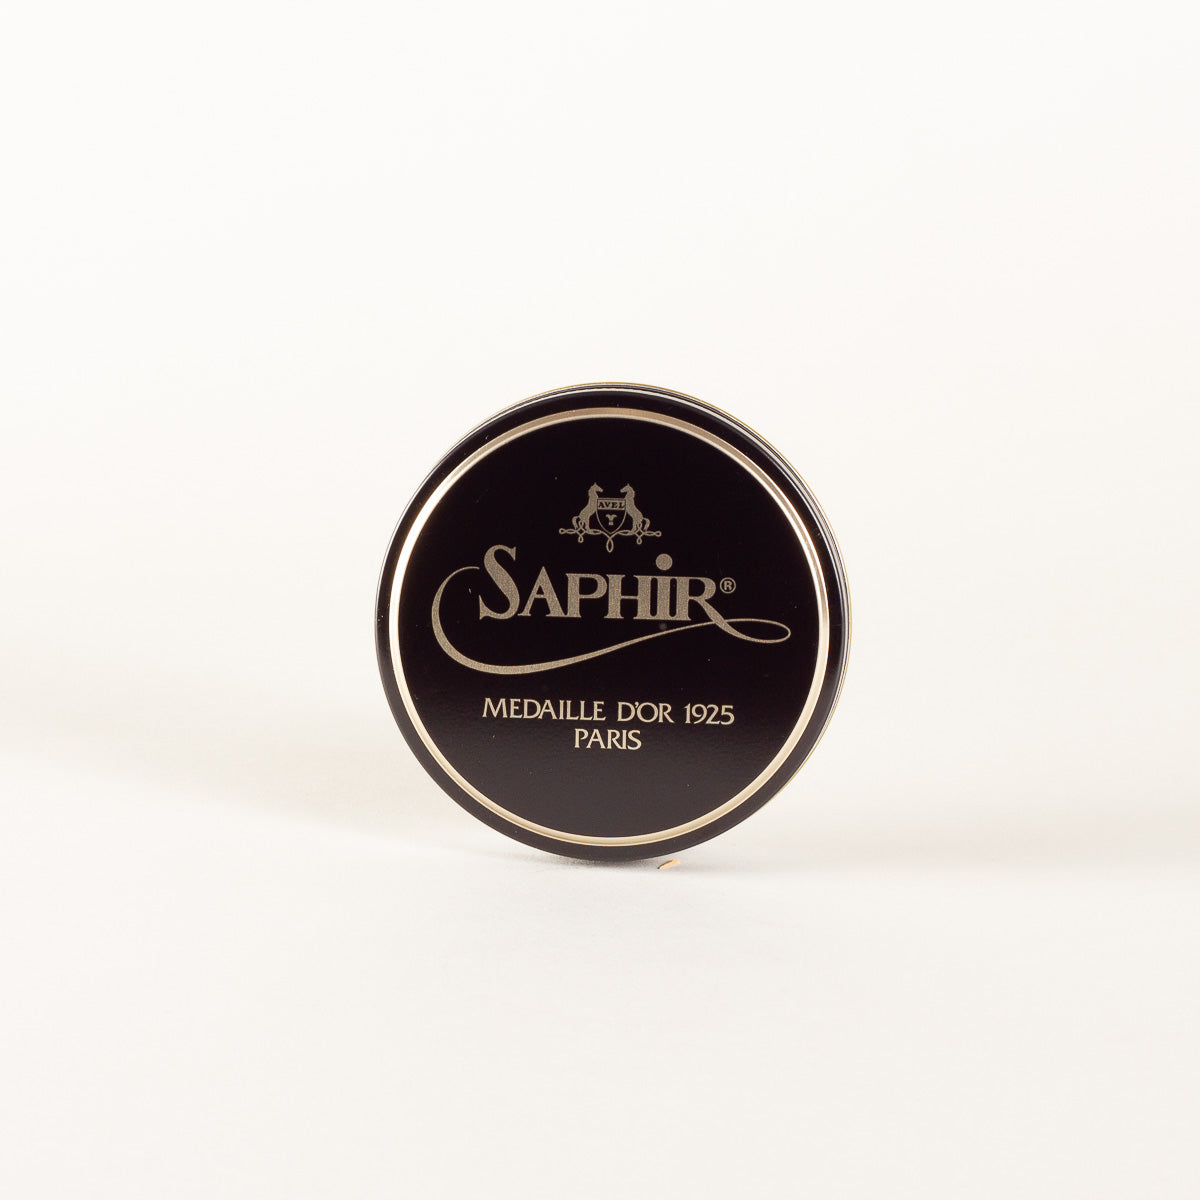 Saphir Médaille d'Or Pâte de Luxe shoe wax 100ml